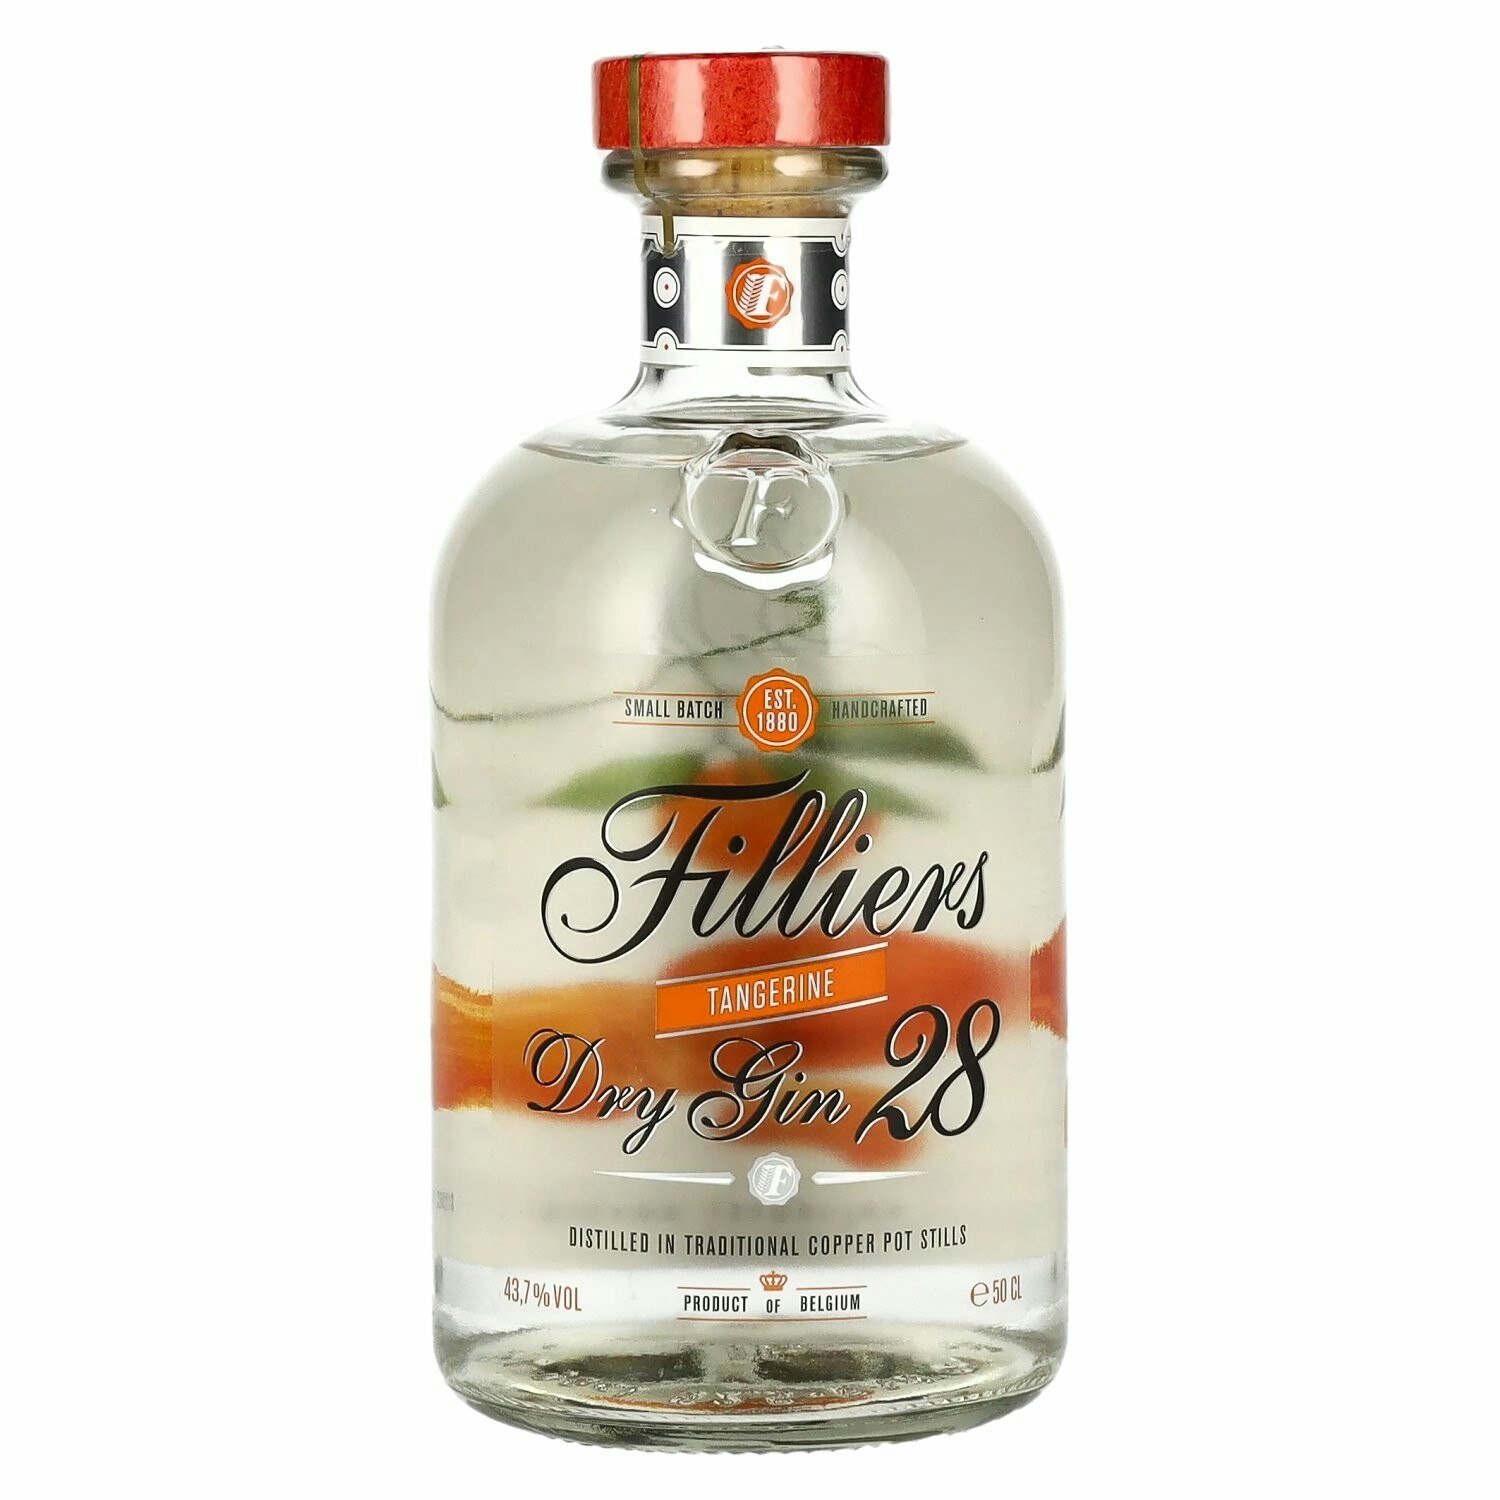 Filliers Dry Gin 28 TANGERINE 43,7% Vol. 0,5l